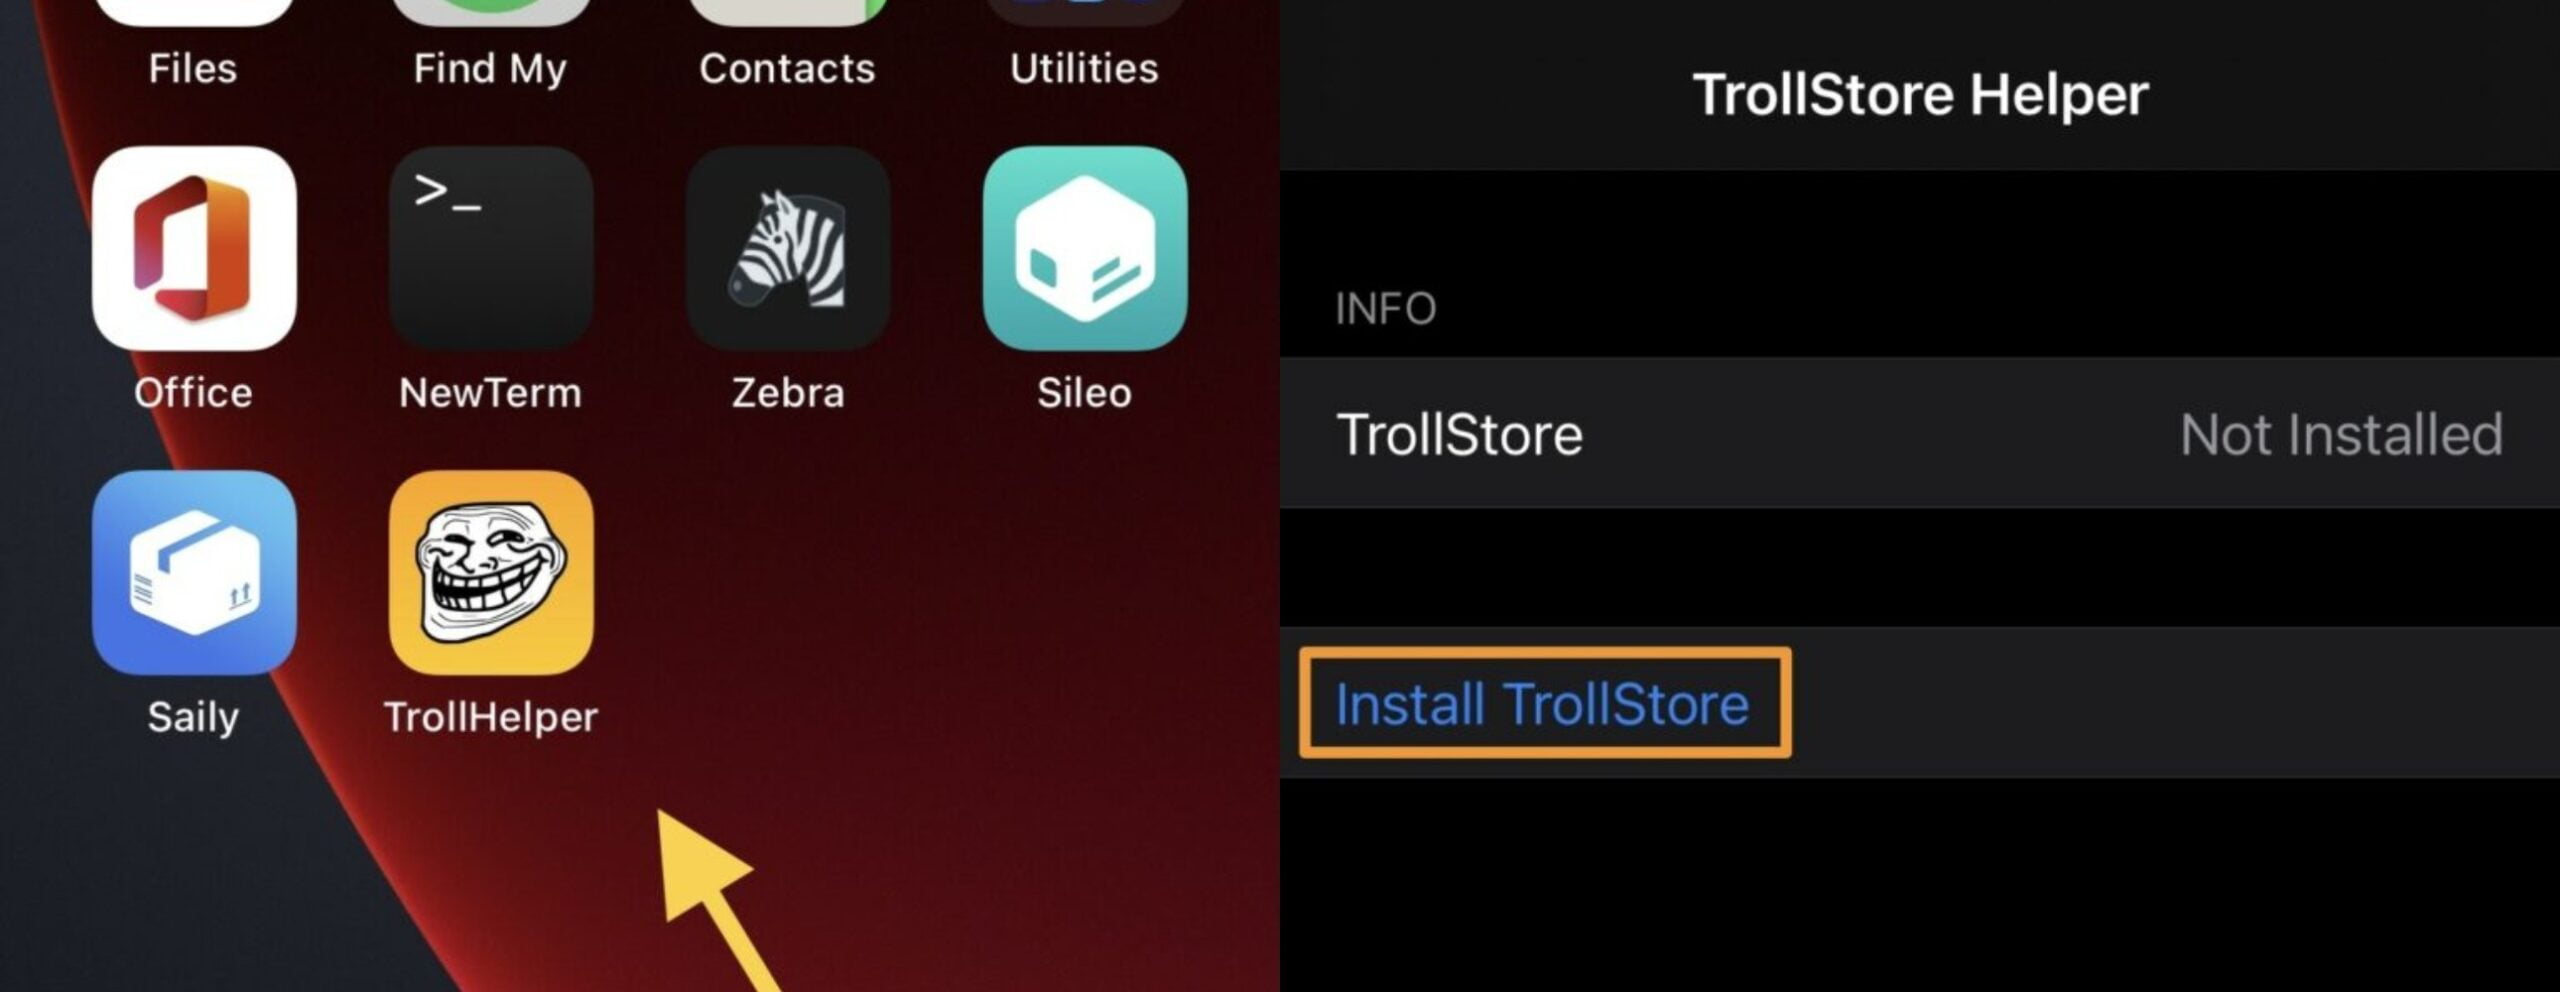 Trollstore巨魔商店官网 - 下载IOS永久签名工具